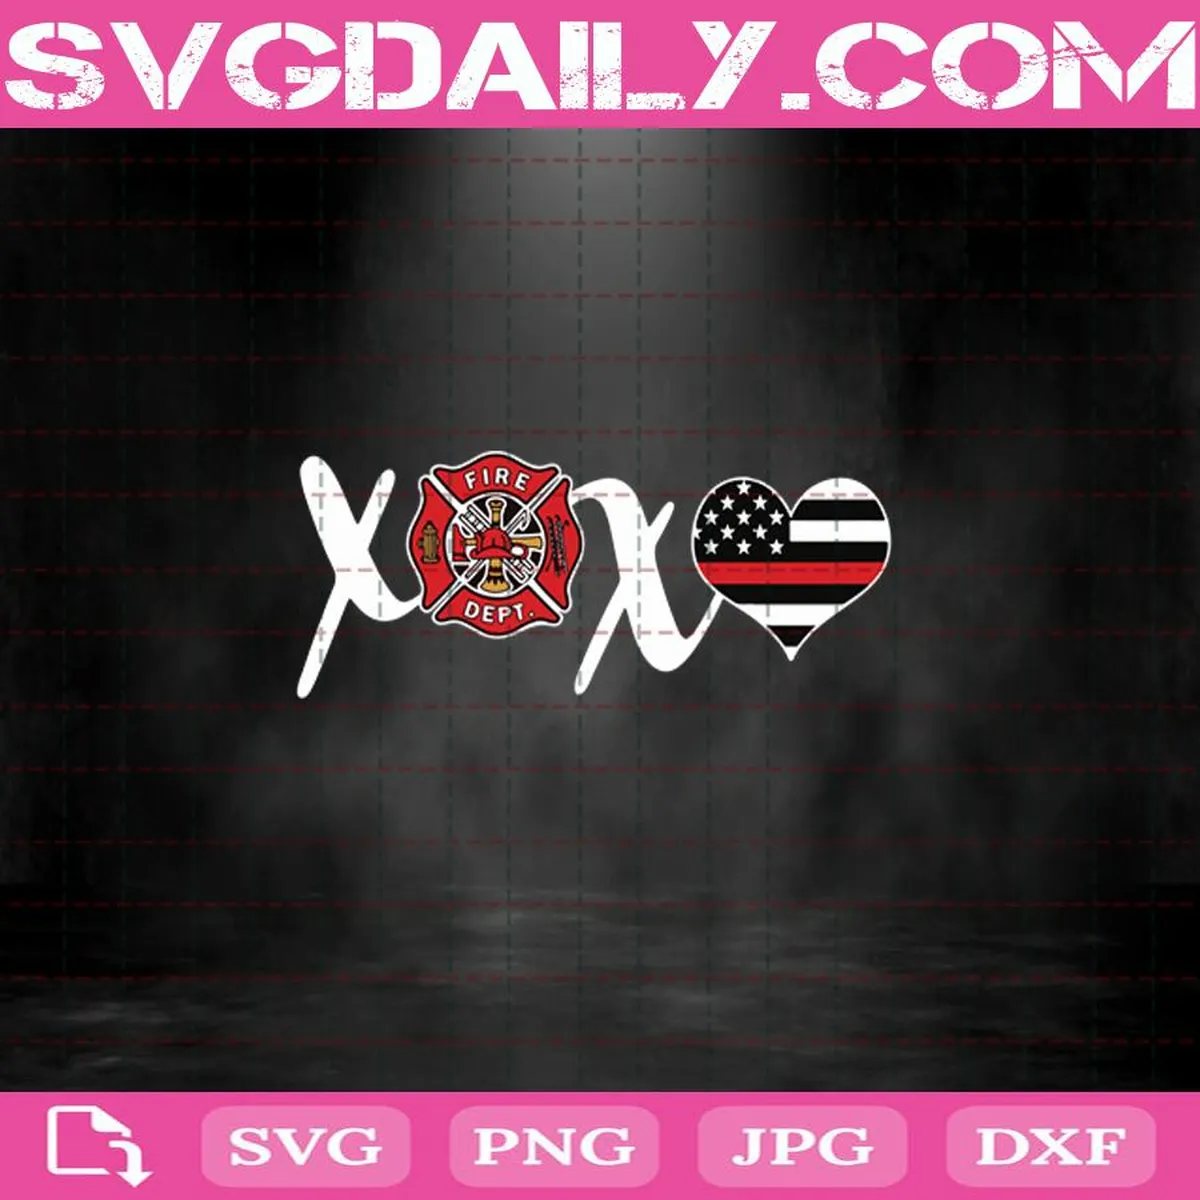 Xoxo Heart Firefighter Svg, Firefighter Svg, Xoxo Heart Svg, Xoxo Svg, Xoxo Firefighter Svg, Firefighter Svg, Heart Firefighter Svg